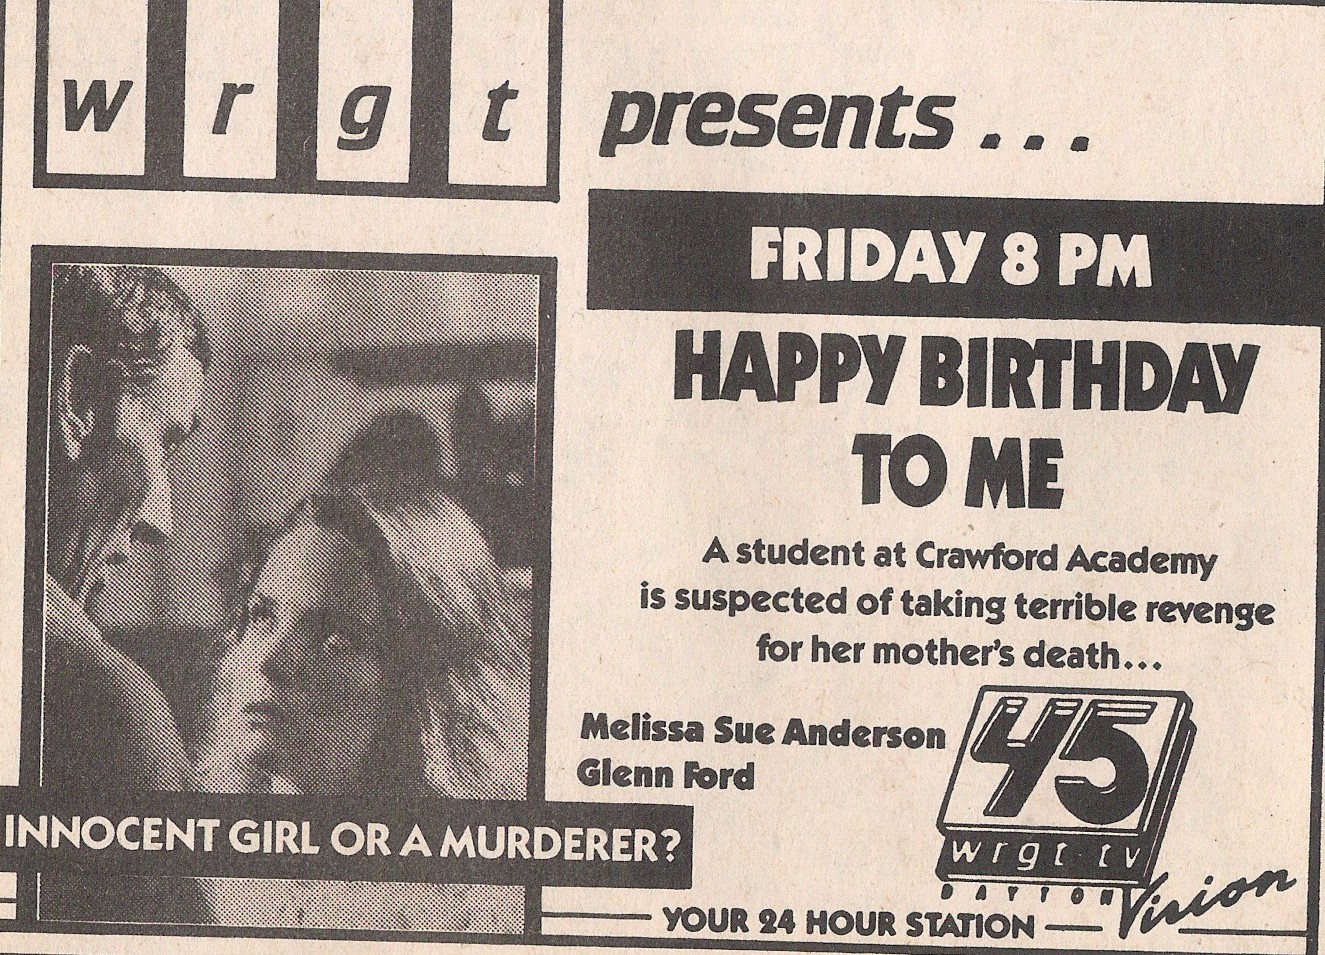 Melissa Sue Anderson in Happy Birthday To Me TV guide